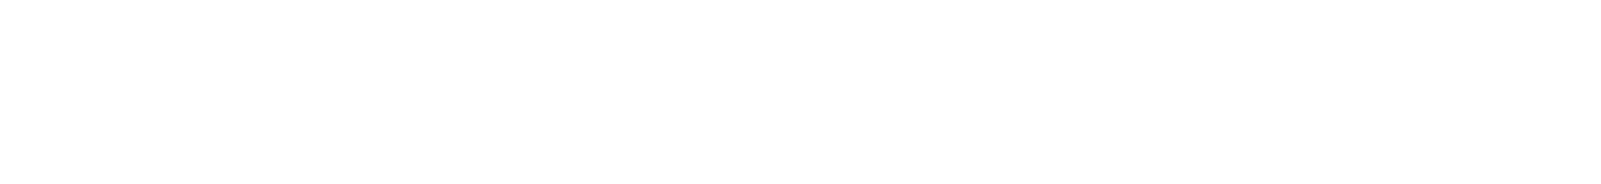 Kadokawa Logo groß für dunkle Hintergründe (transparentes PNG)